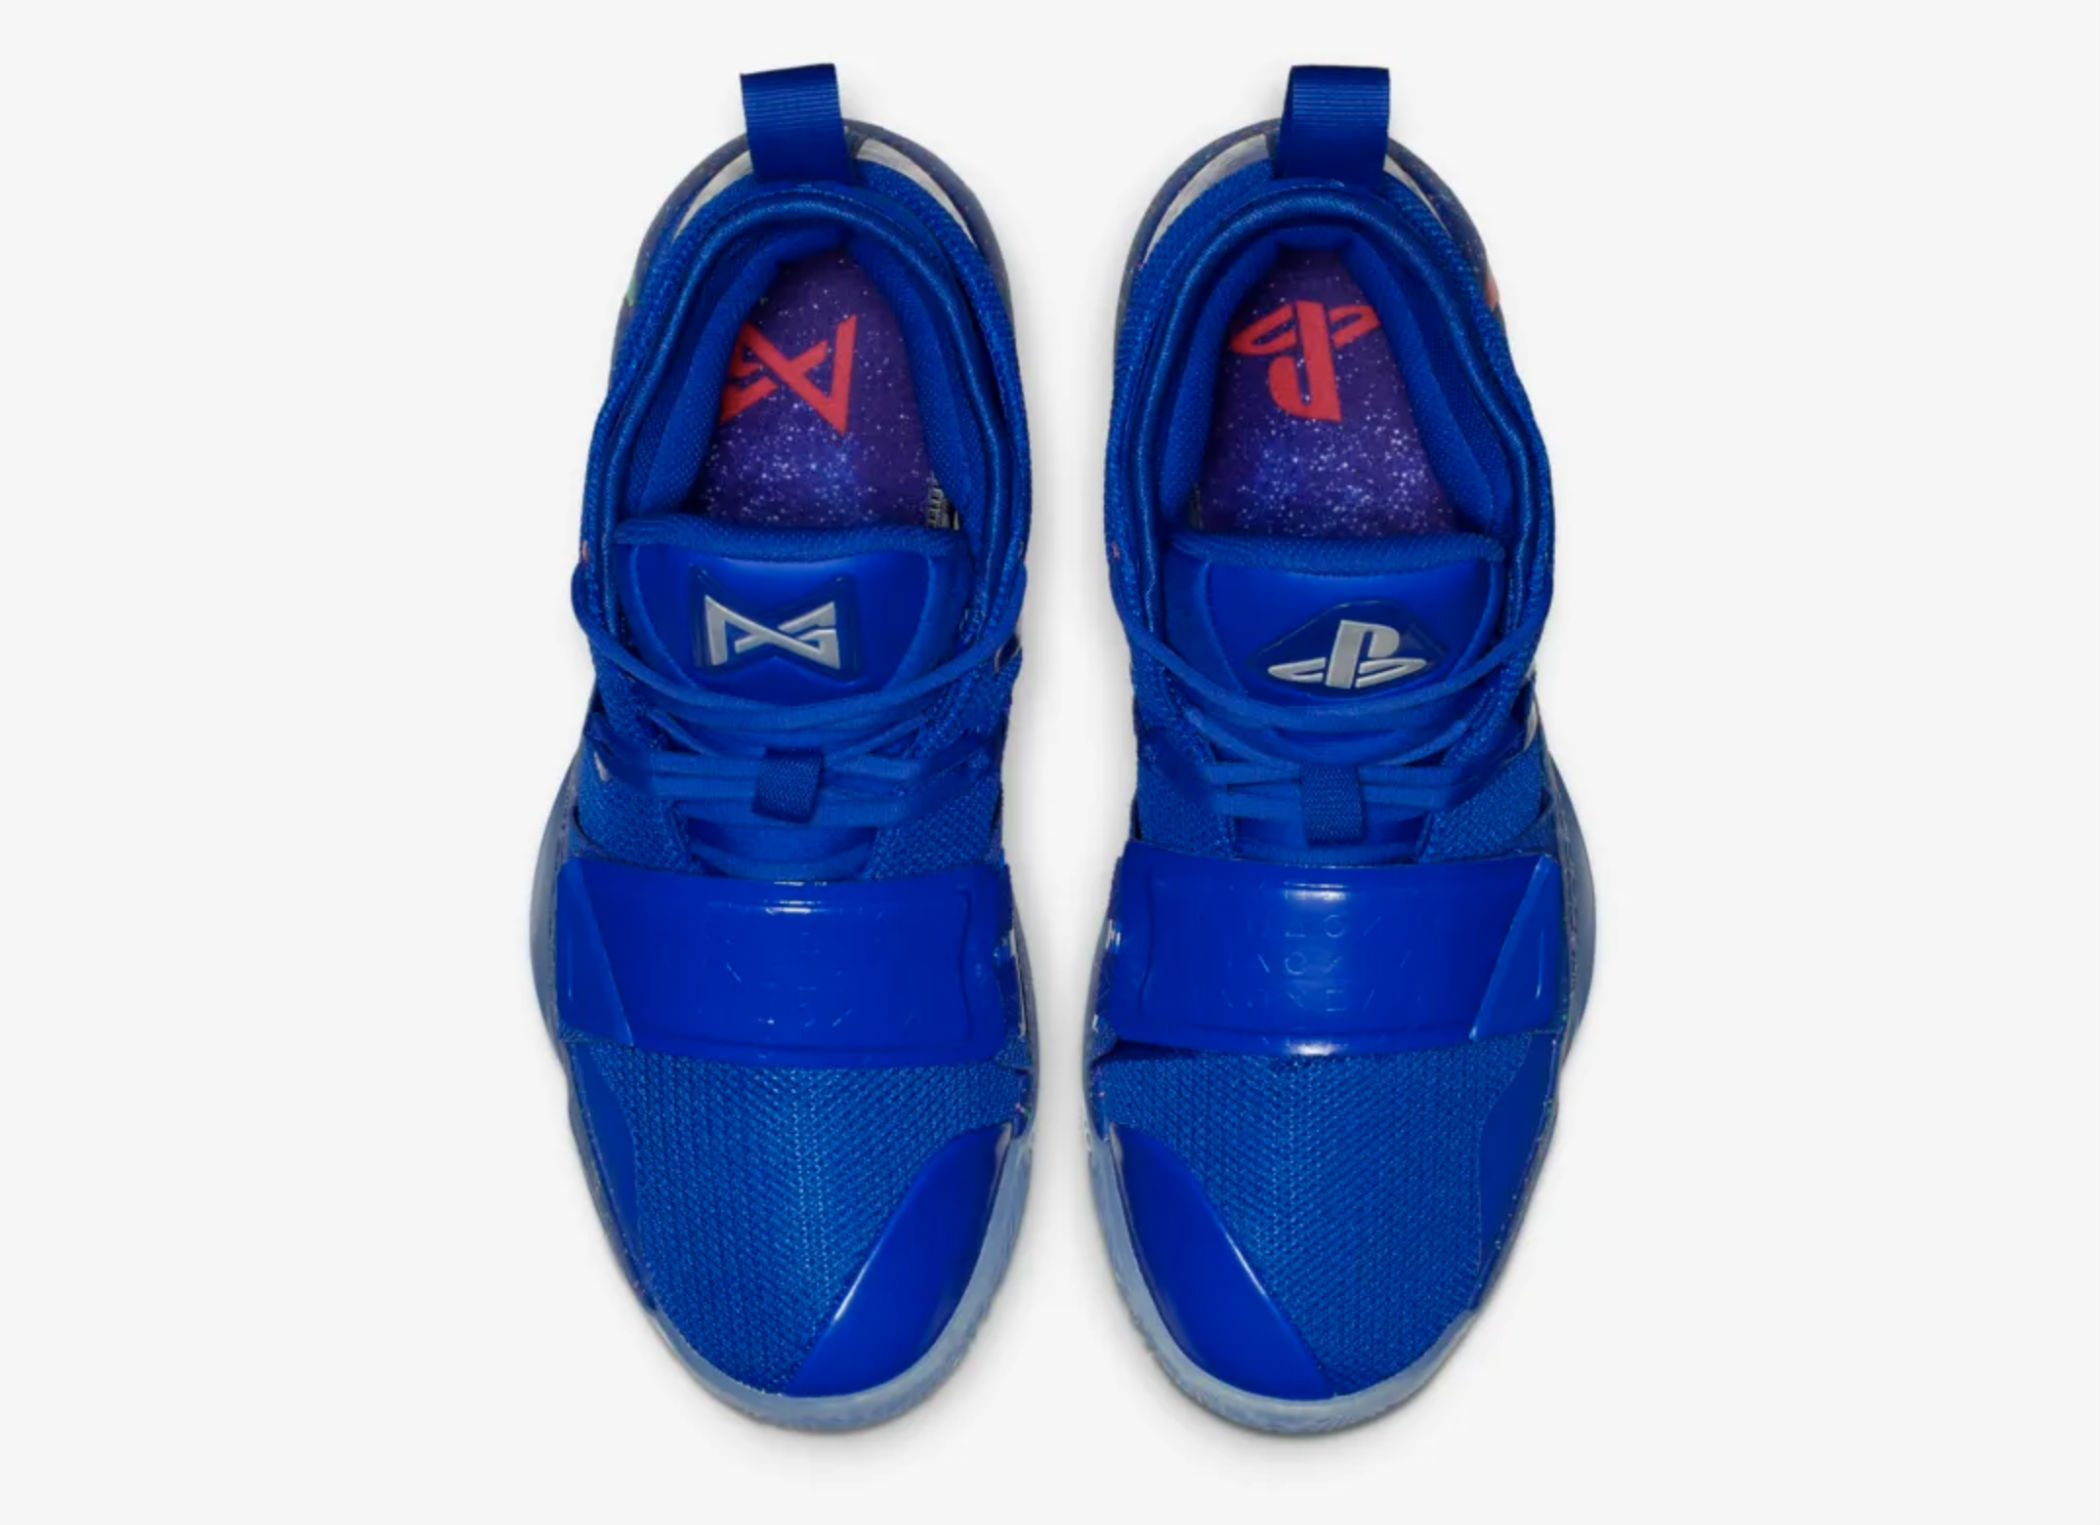 Tênis PlayStation da Nike com Paul George, chega amanhã na cor azul